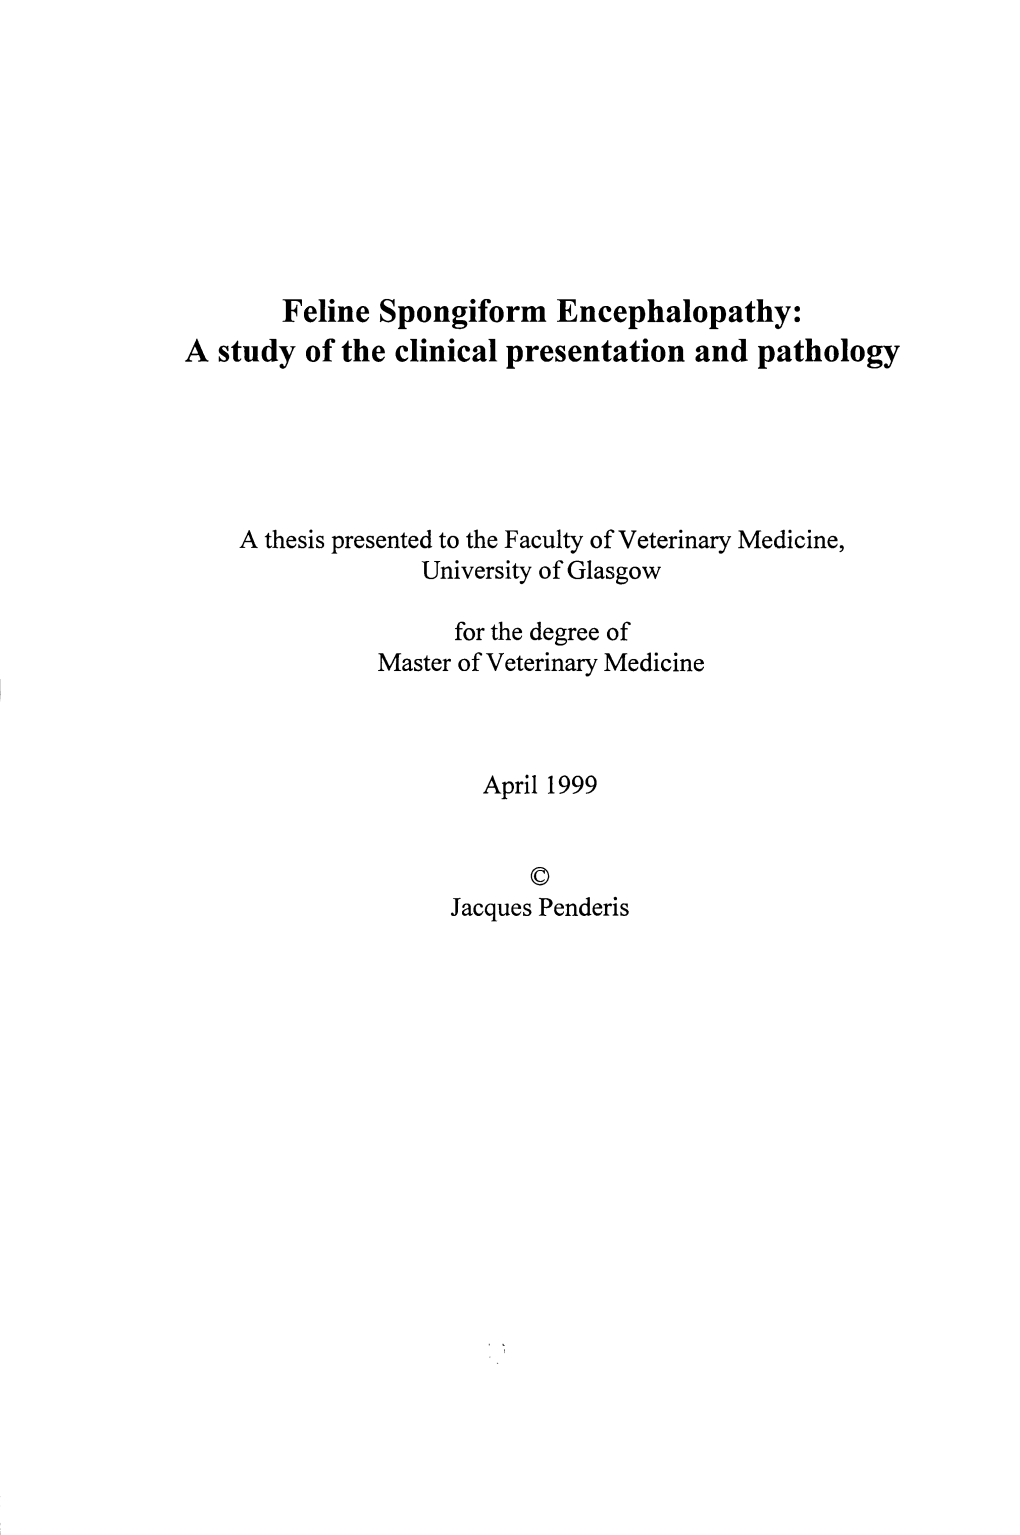 Feline Spongiform Encephalopathy: a Study of the Clinical Presentation and Pathology